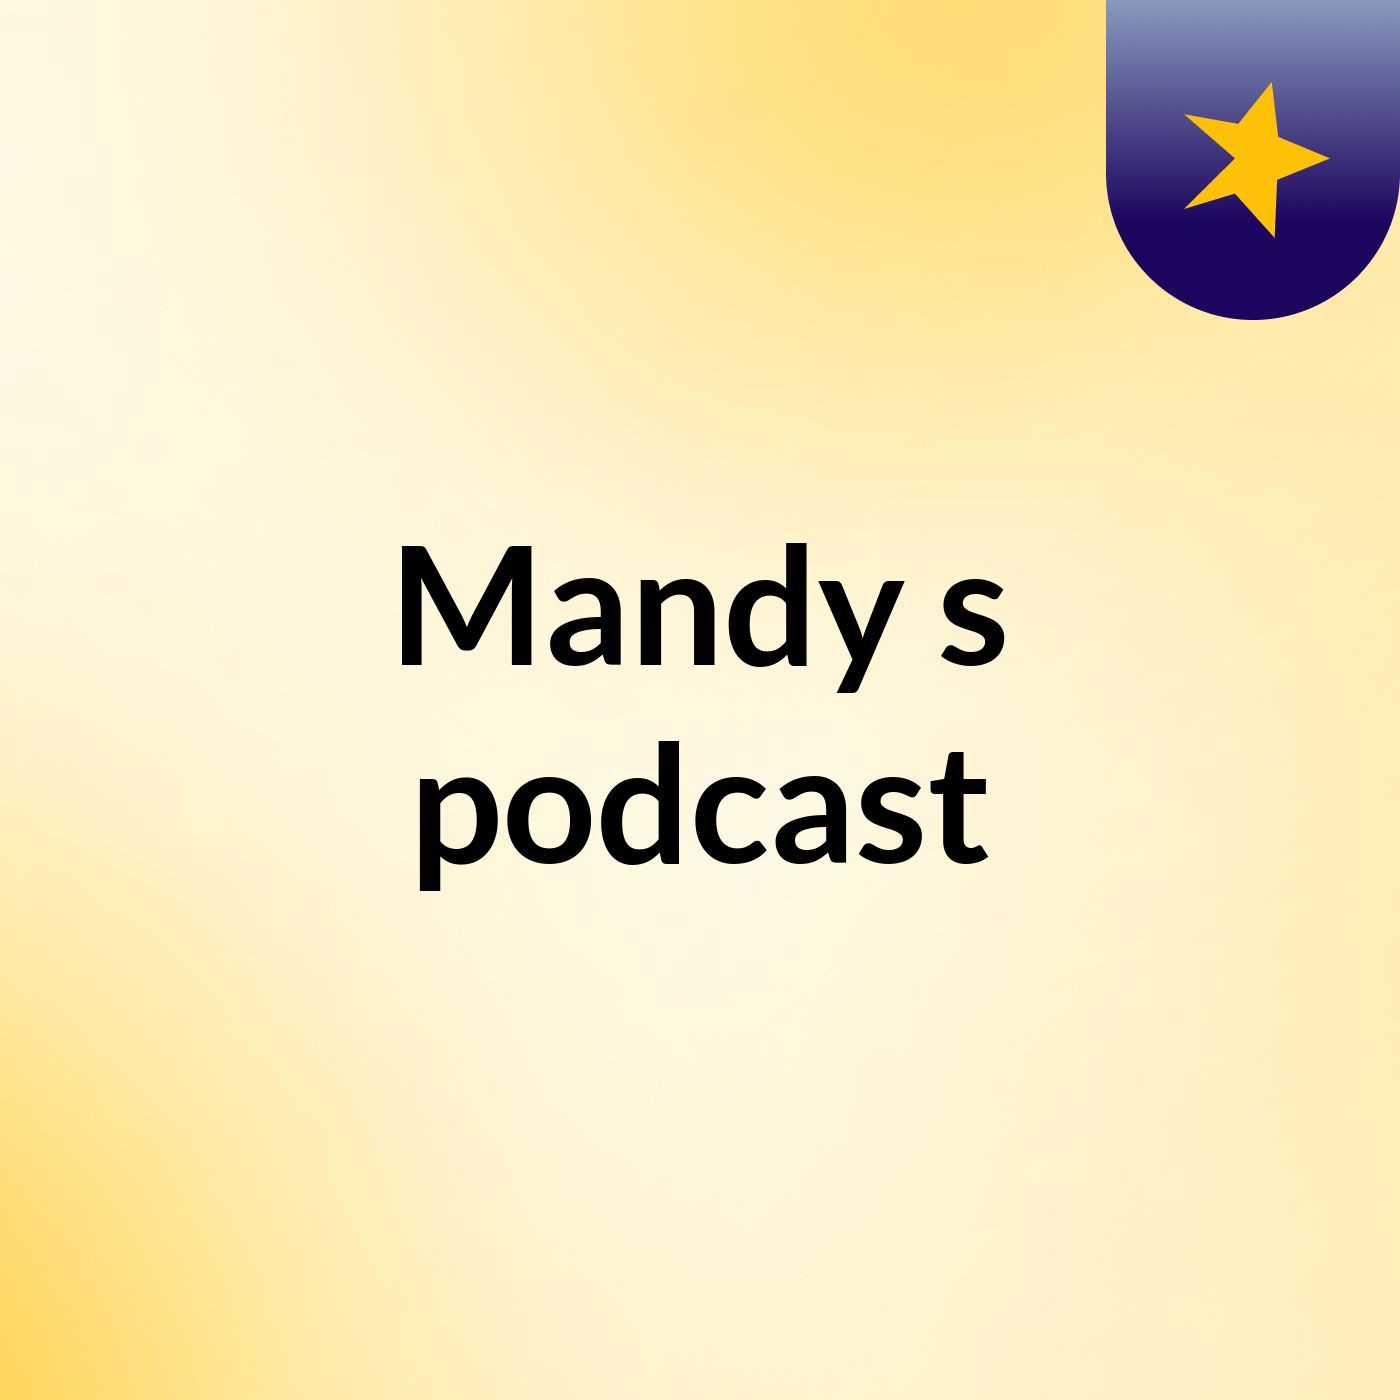 Mandy's podcast